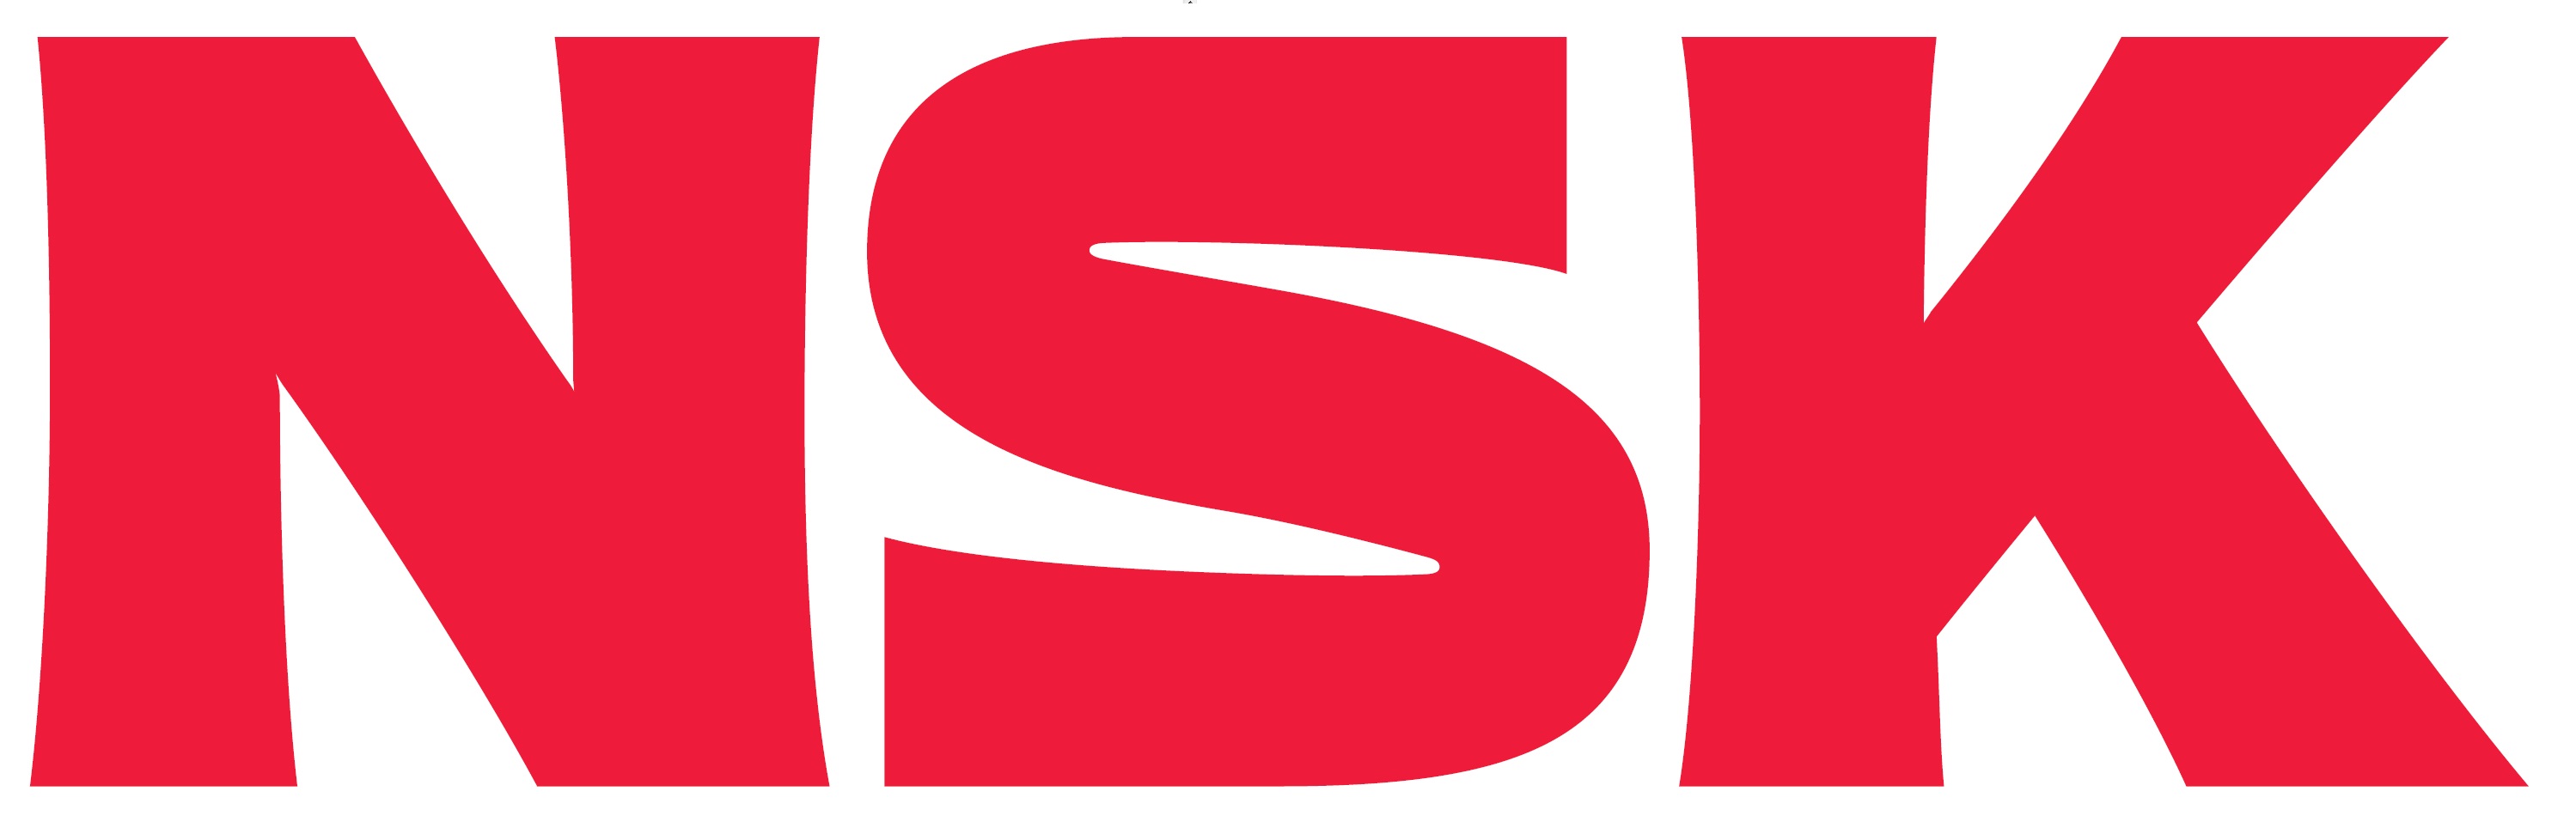 brand logo 5